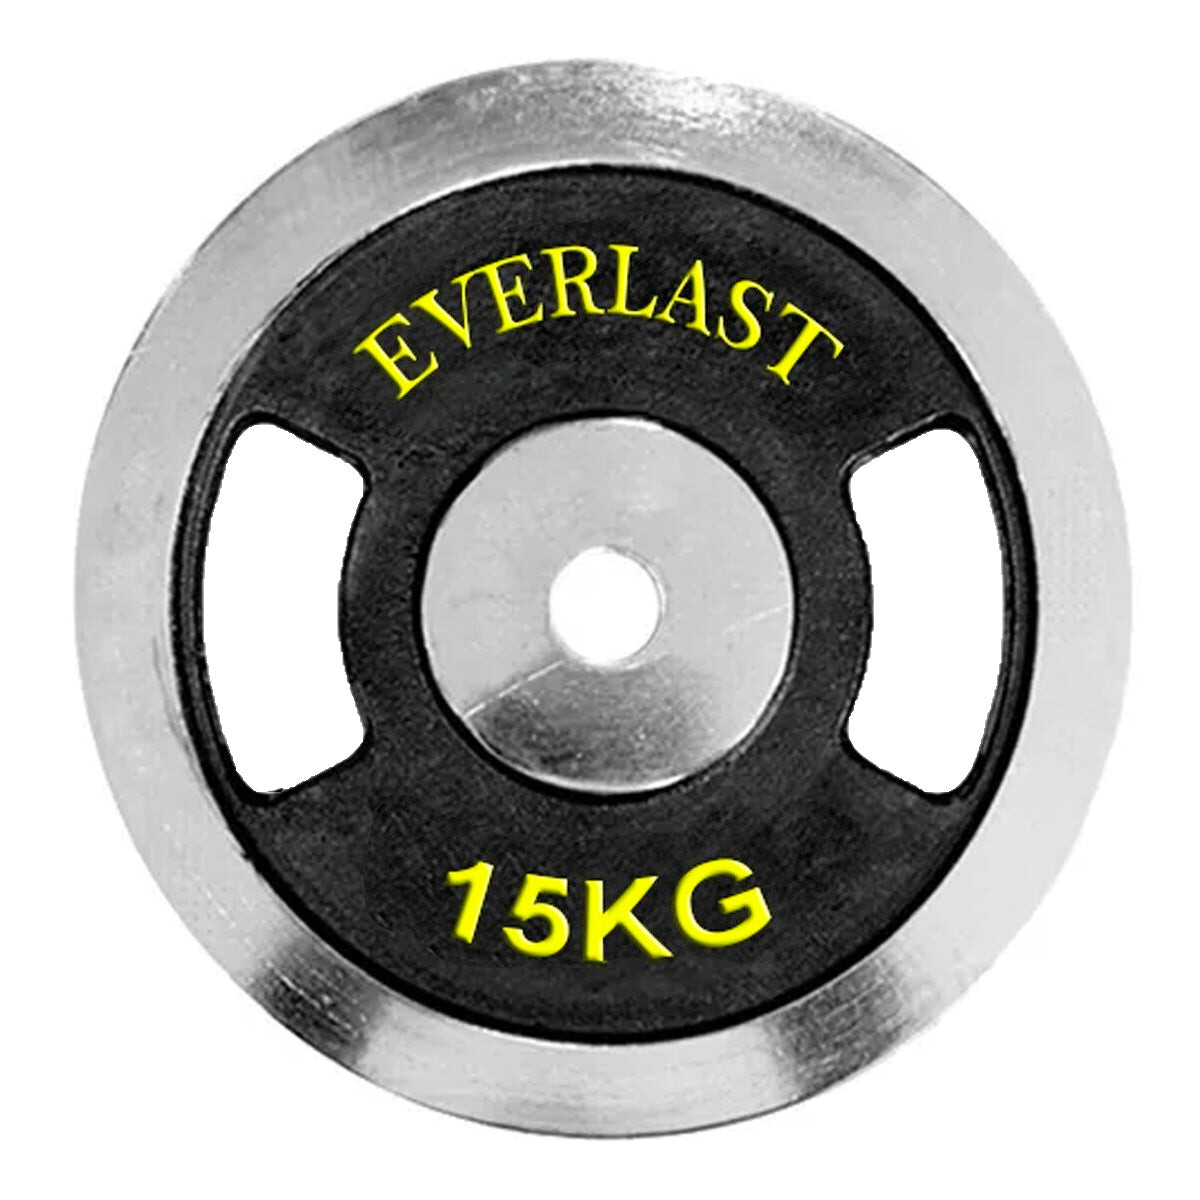 Disco Everlast En Hierro Cromado C/ Agarre 15kg 